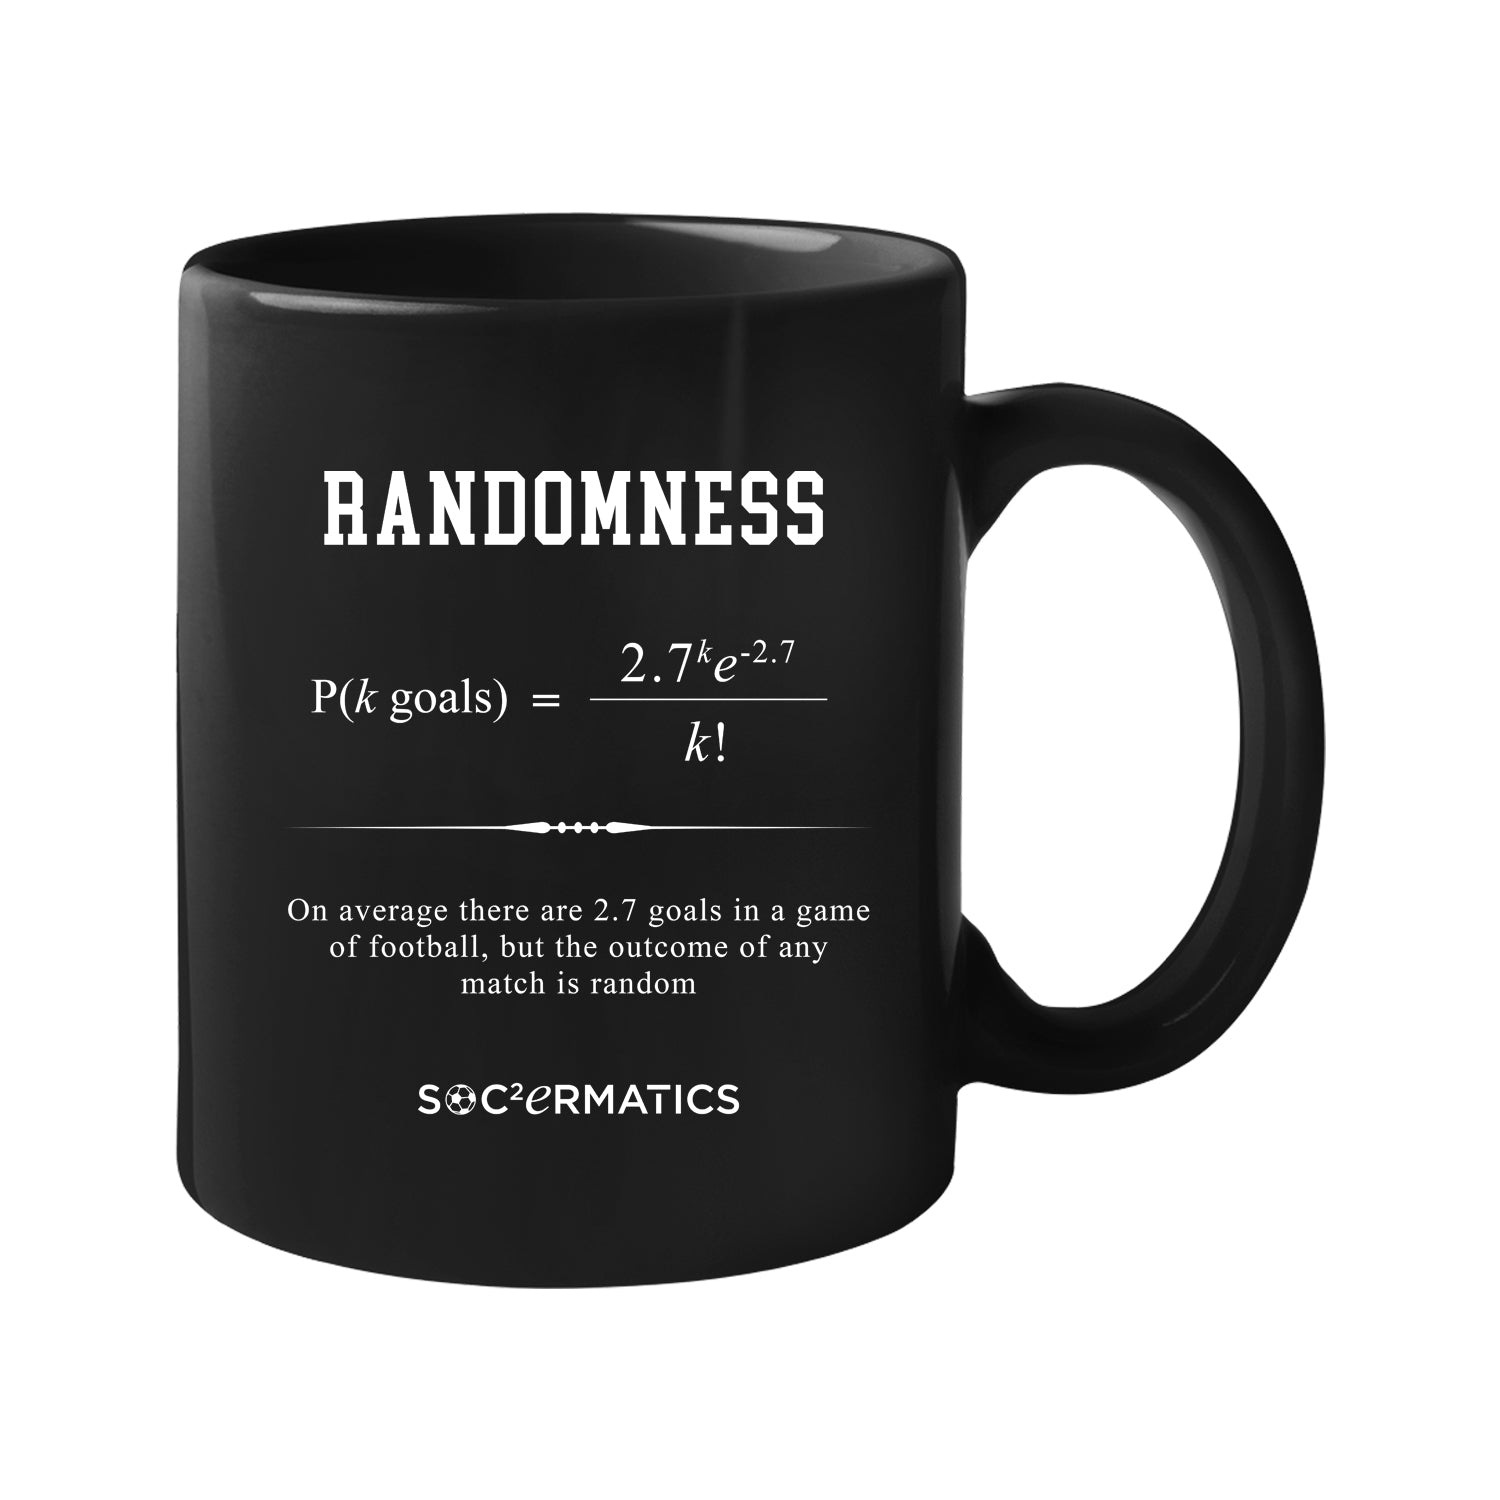 Randomness - Soccermatics - Mug 11 oz